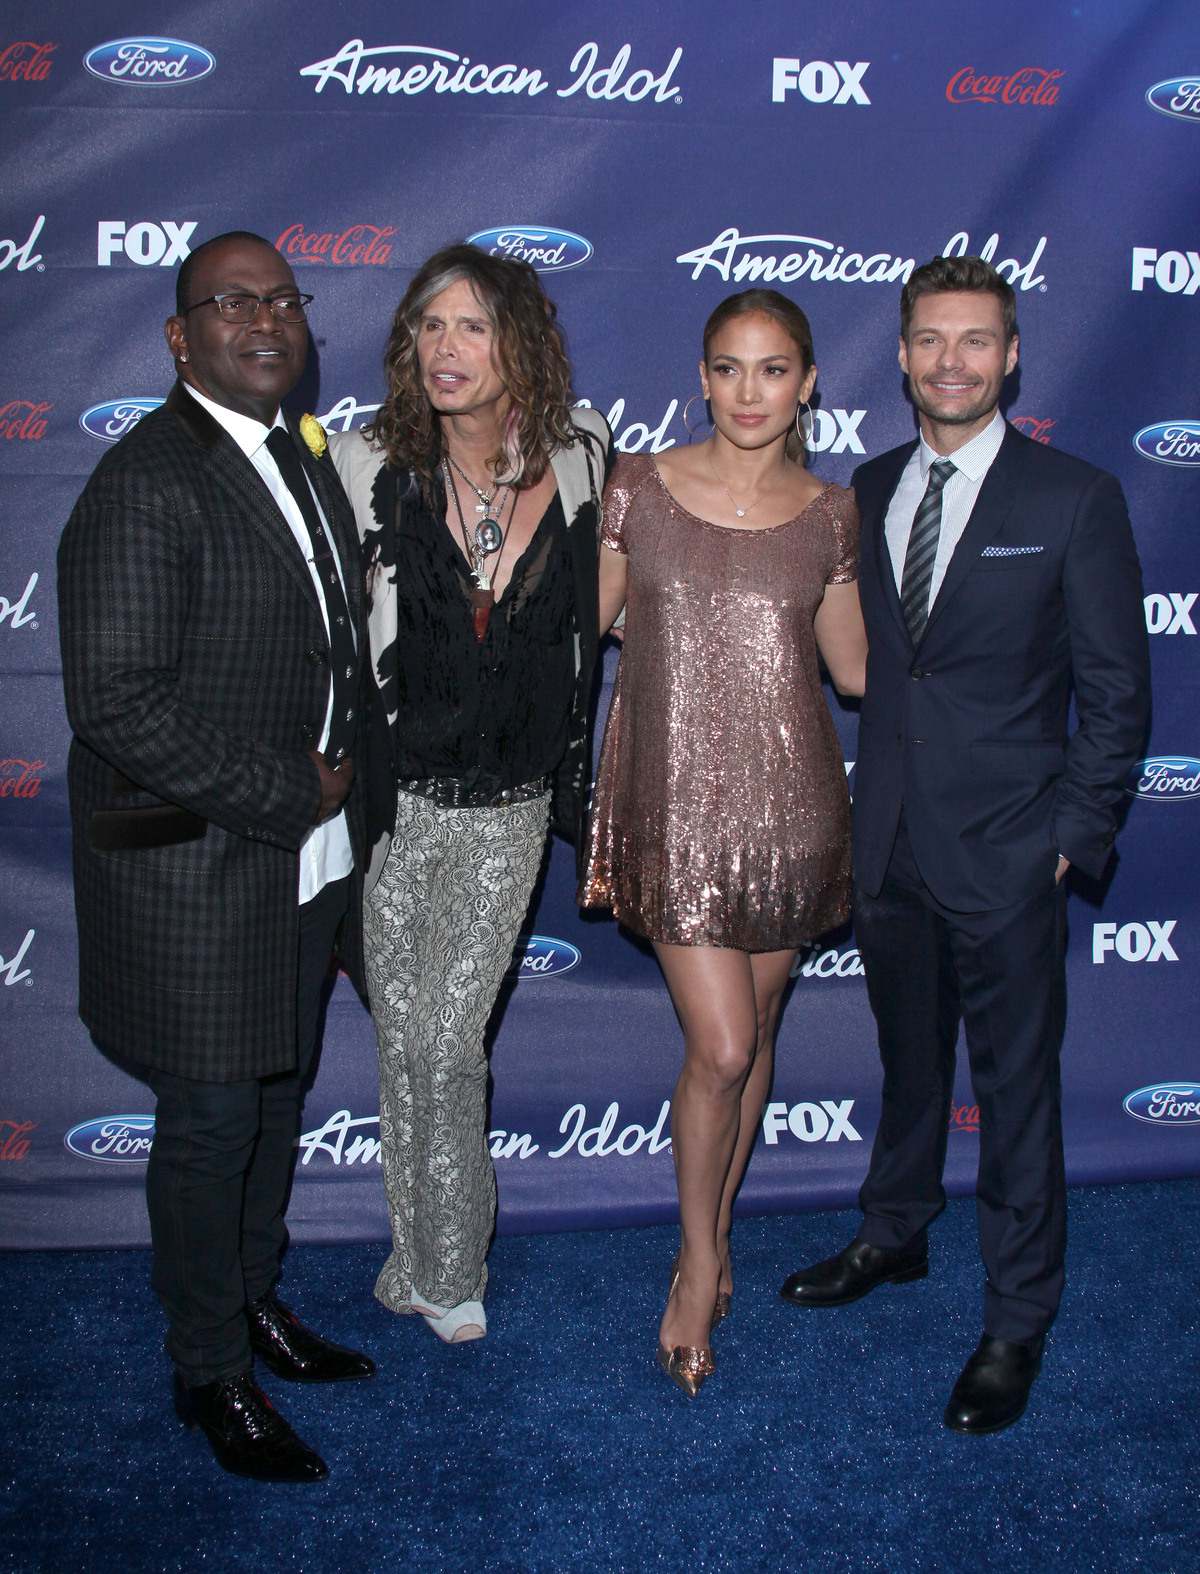 Дженнифер Лопес на вечеринке "American Idol"